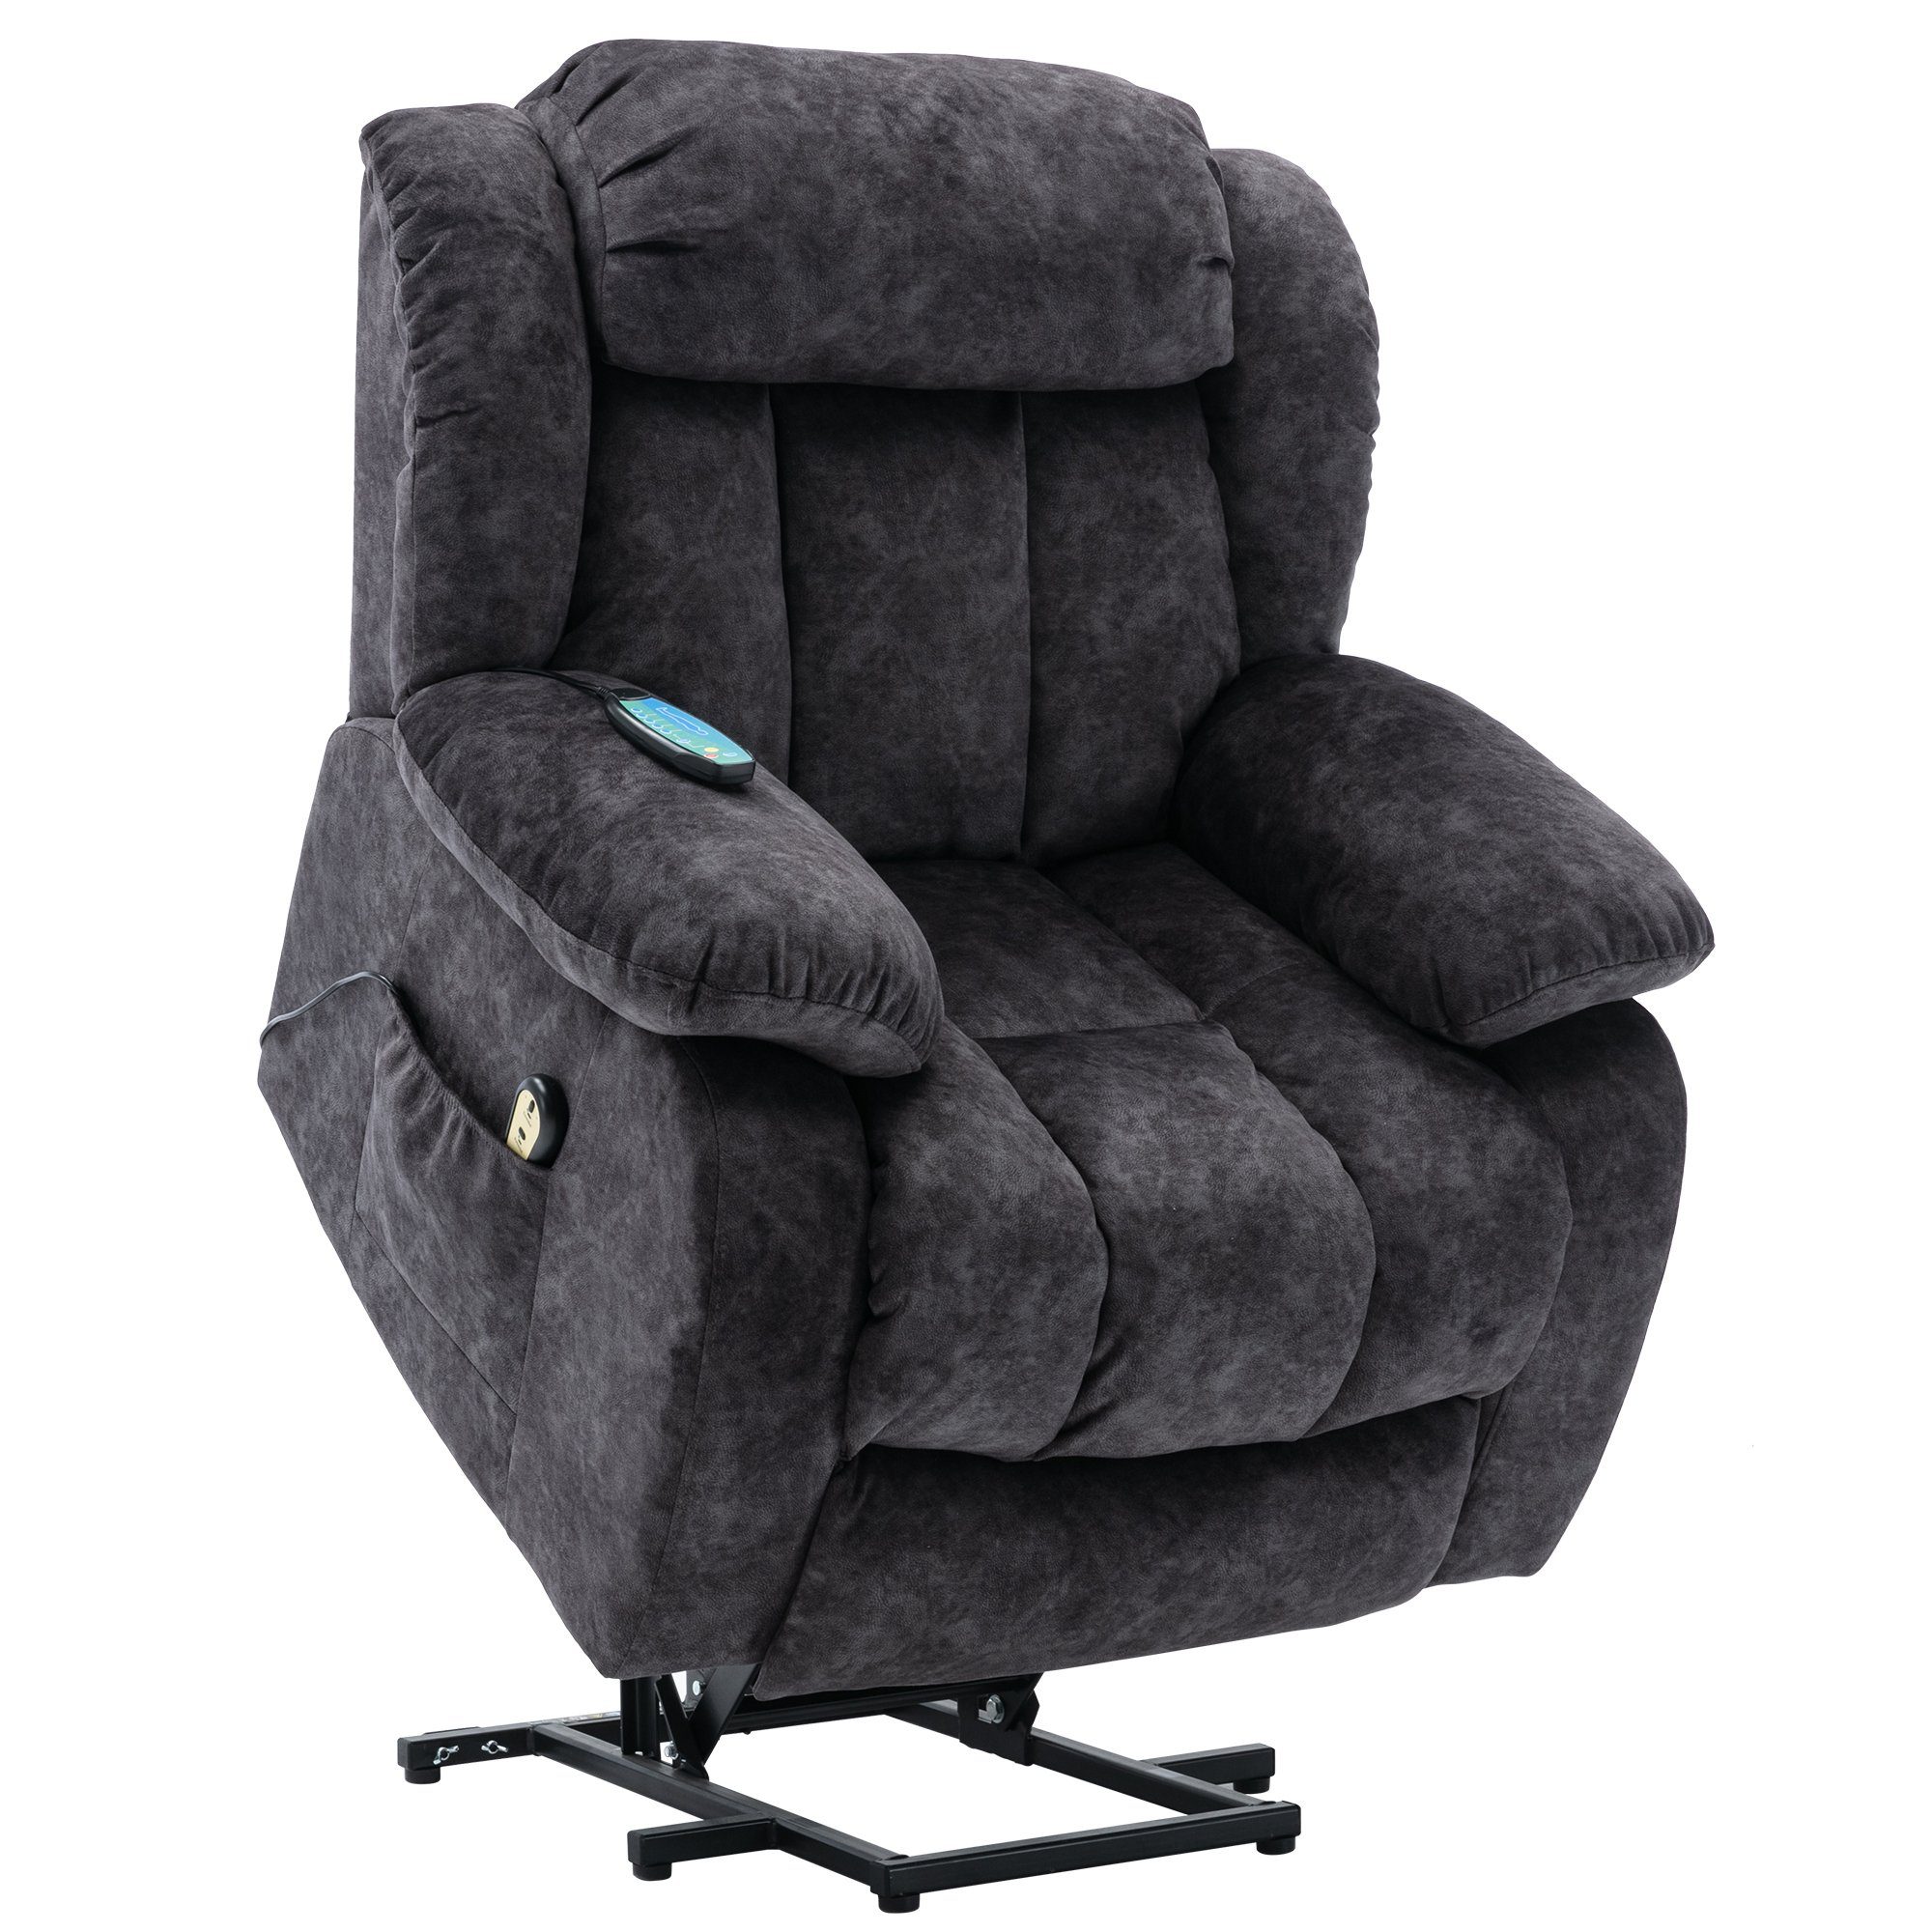 Merax TV-Sessel, Massagesesel mit Wärme und Vibration, USB-verstellbar, beheizt Grau | Funktionssessel